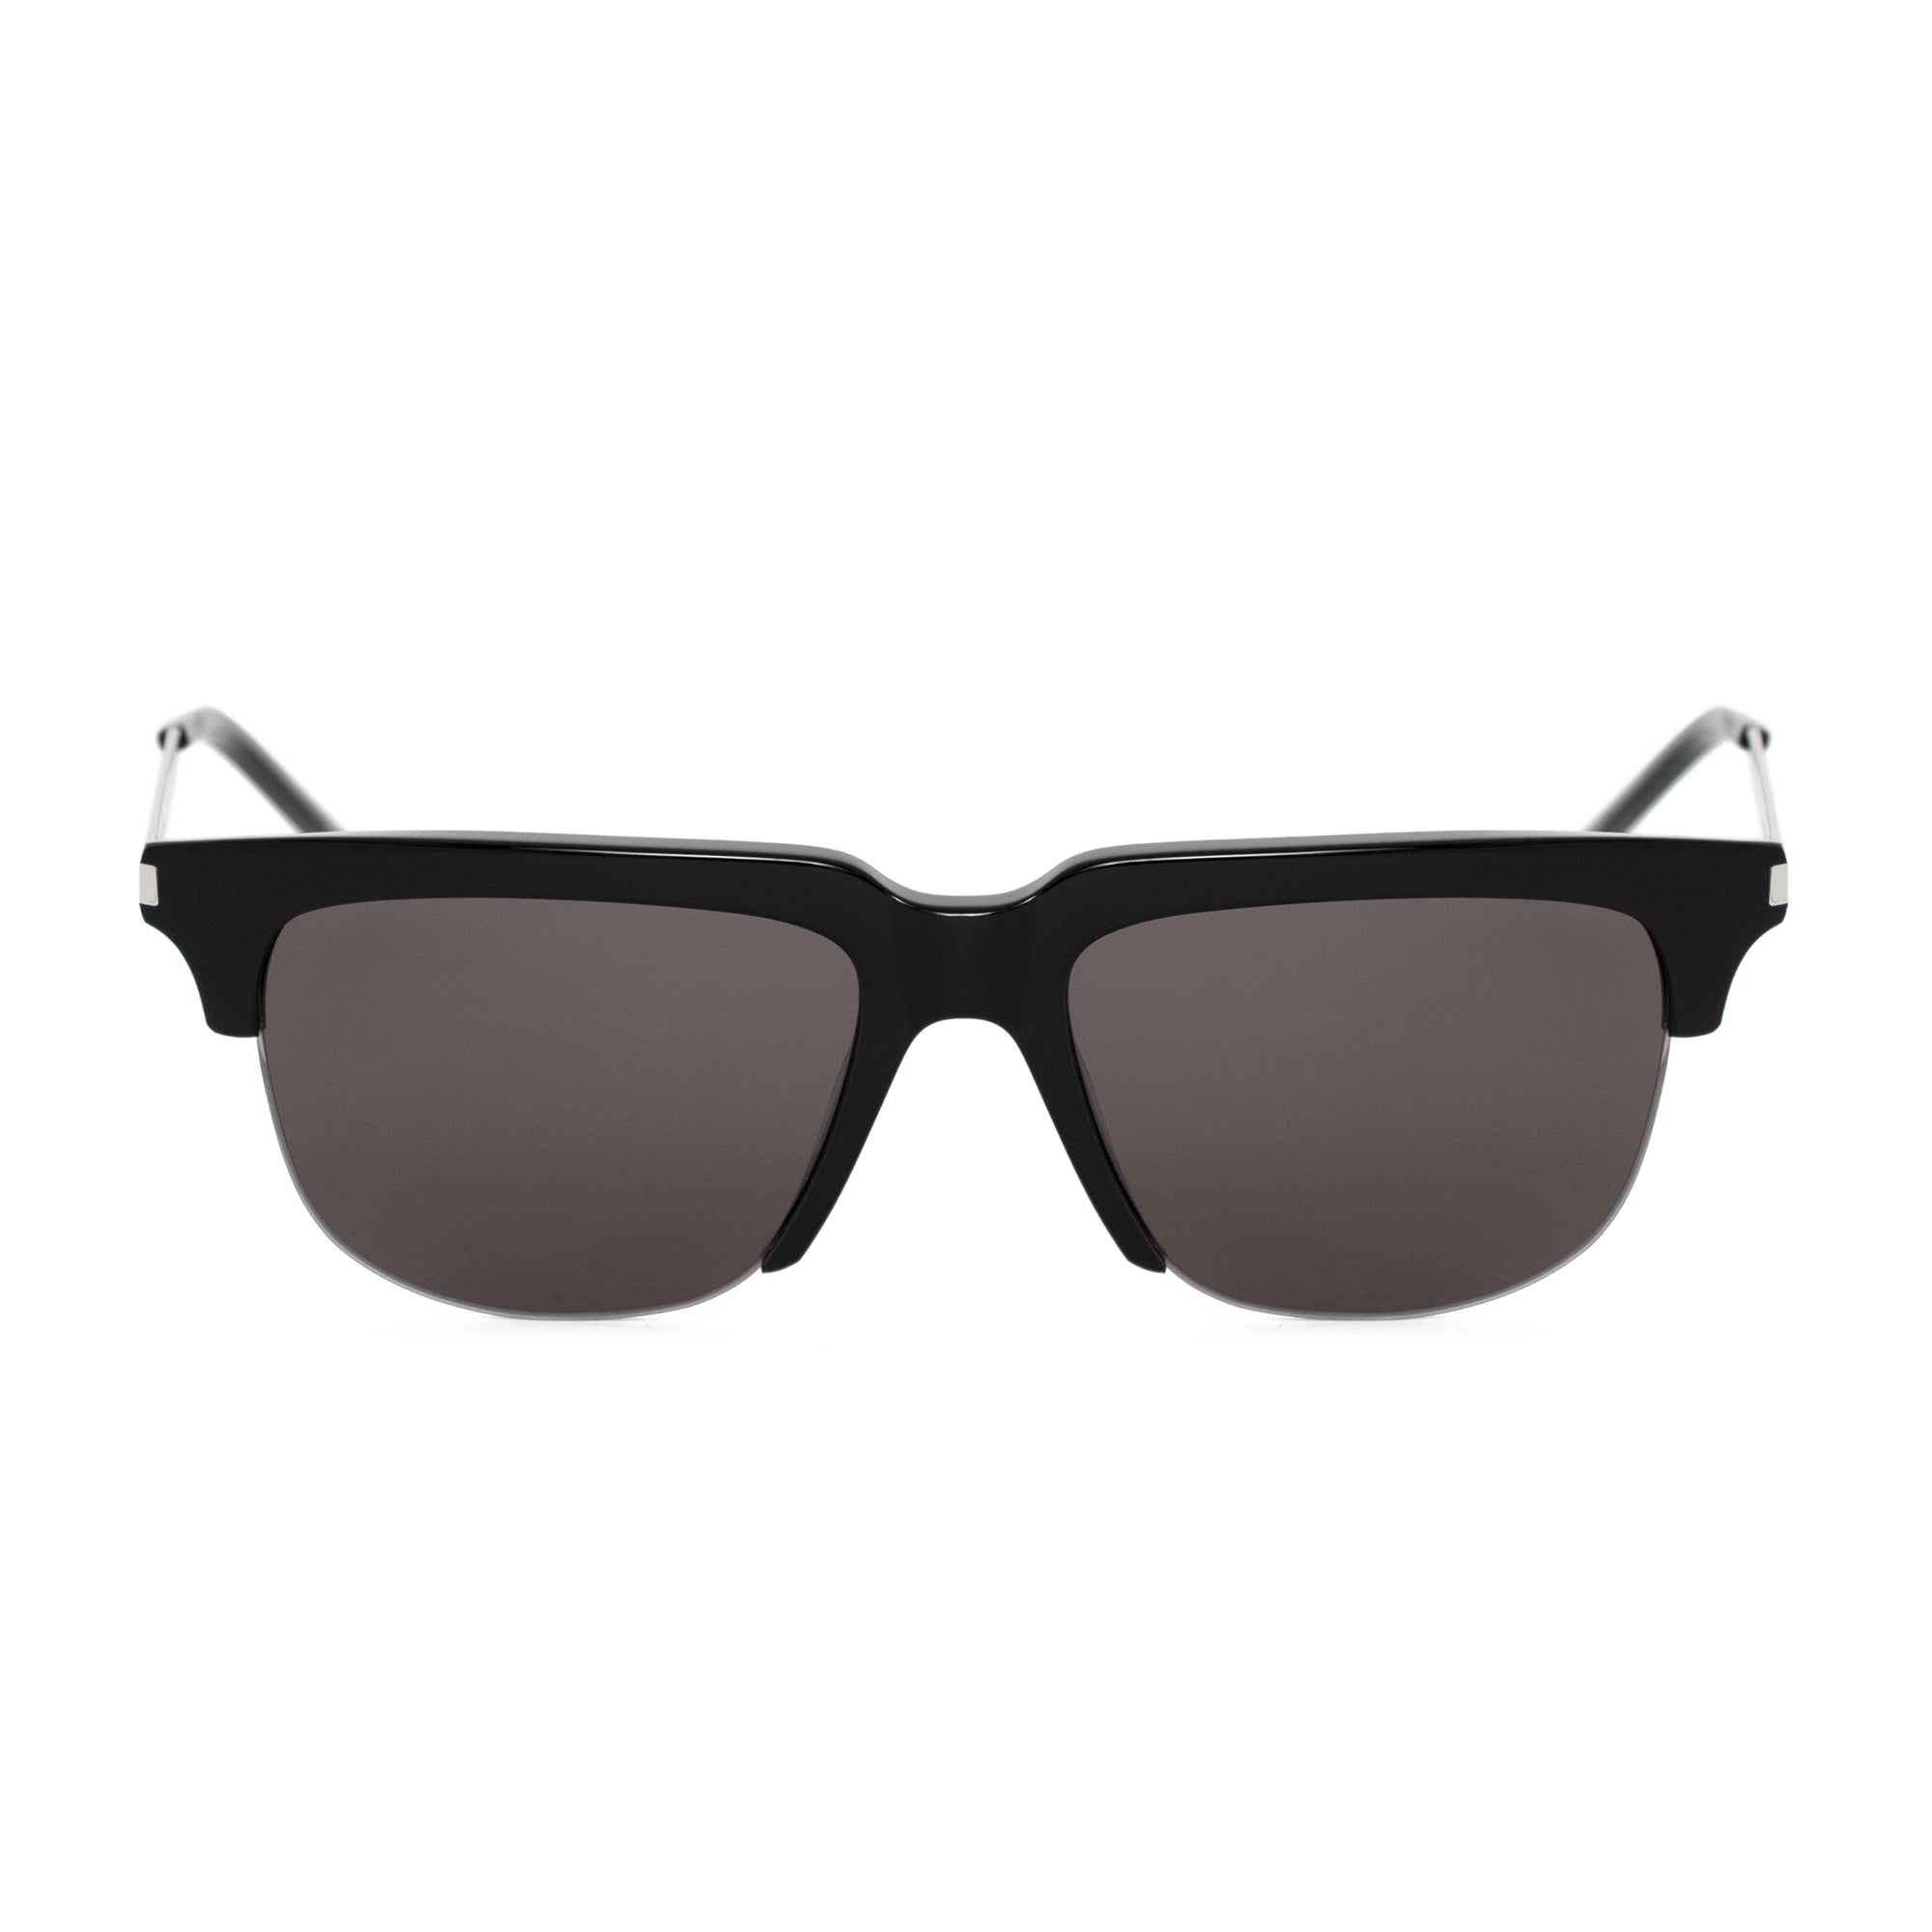 Saint Laurent Wayfarer Sunglasses SL420 002 53